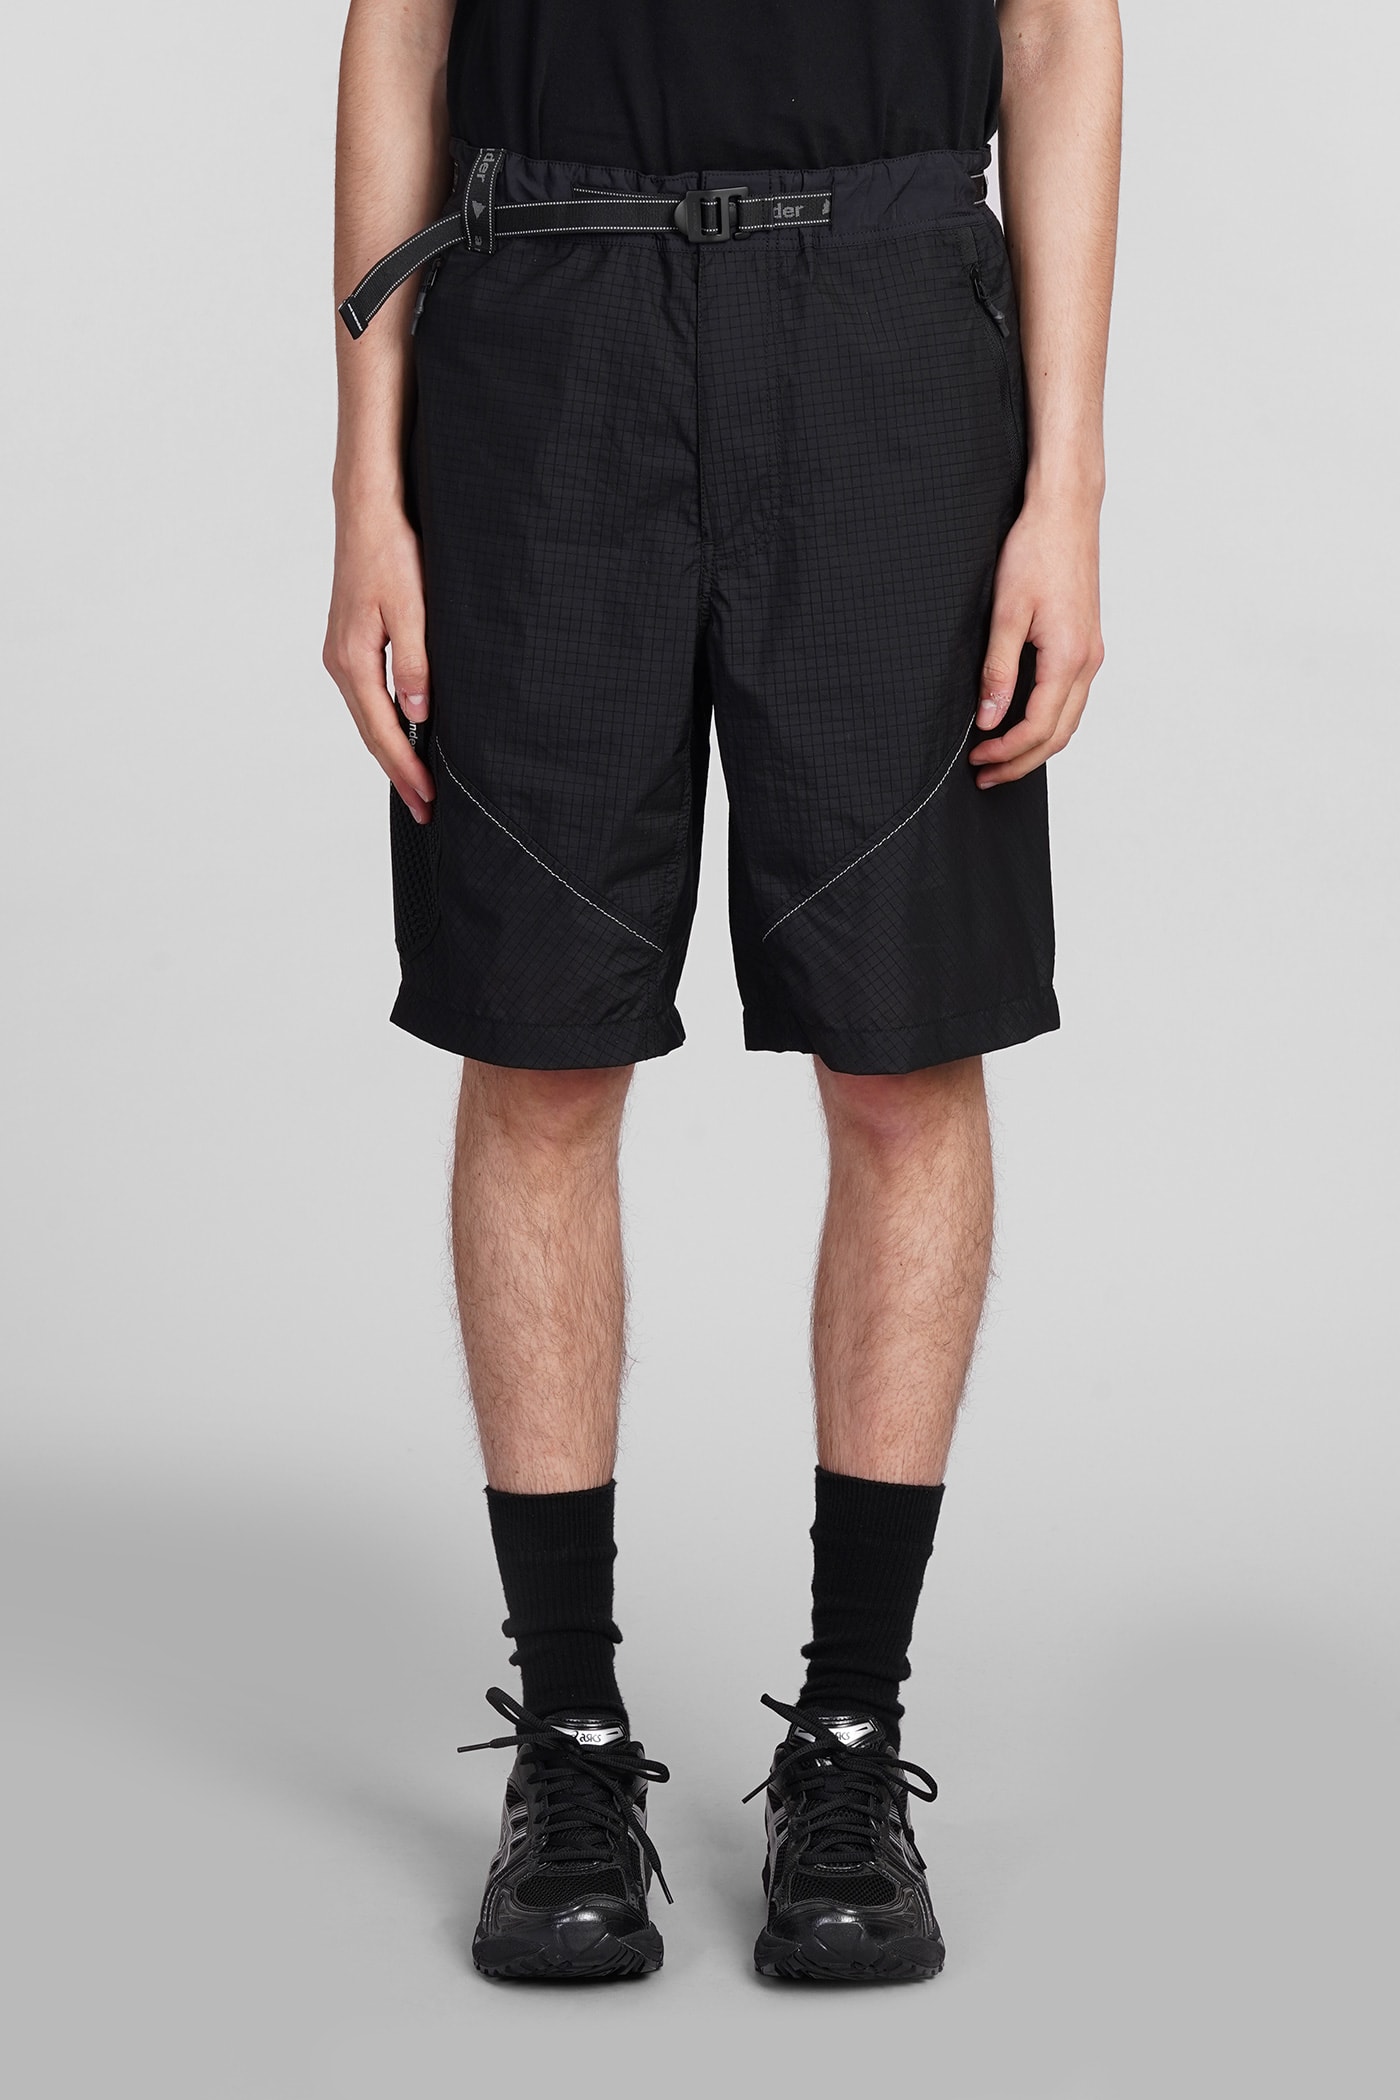 Shorts In Black Nylon